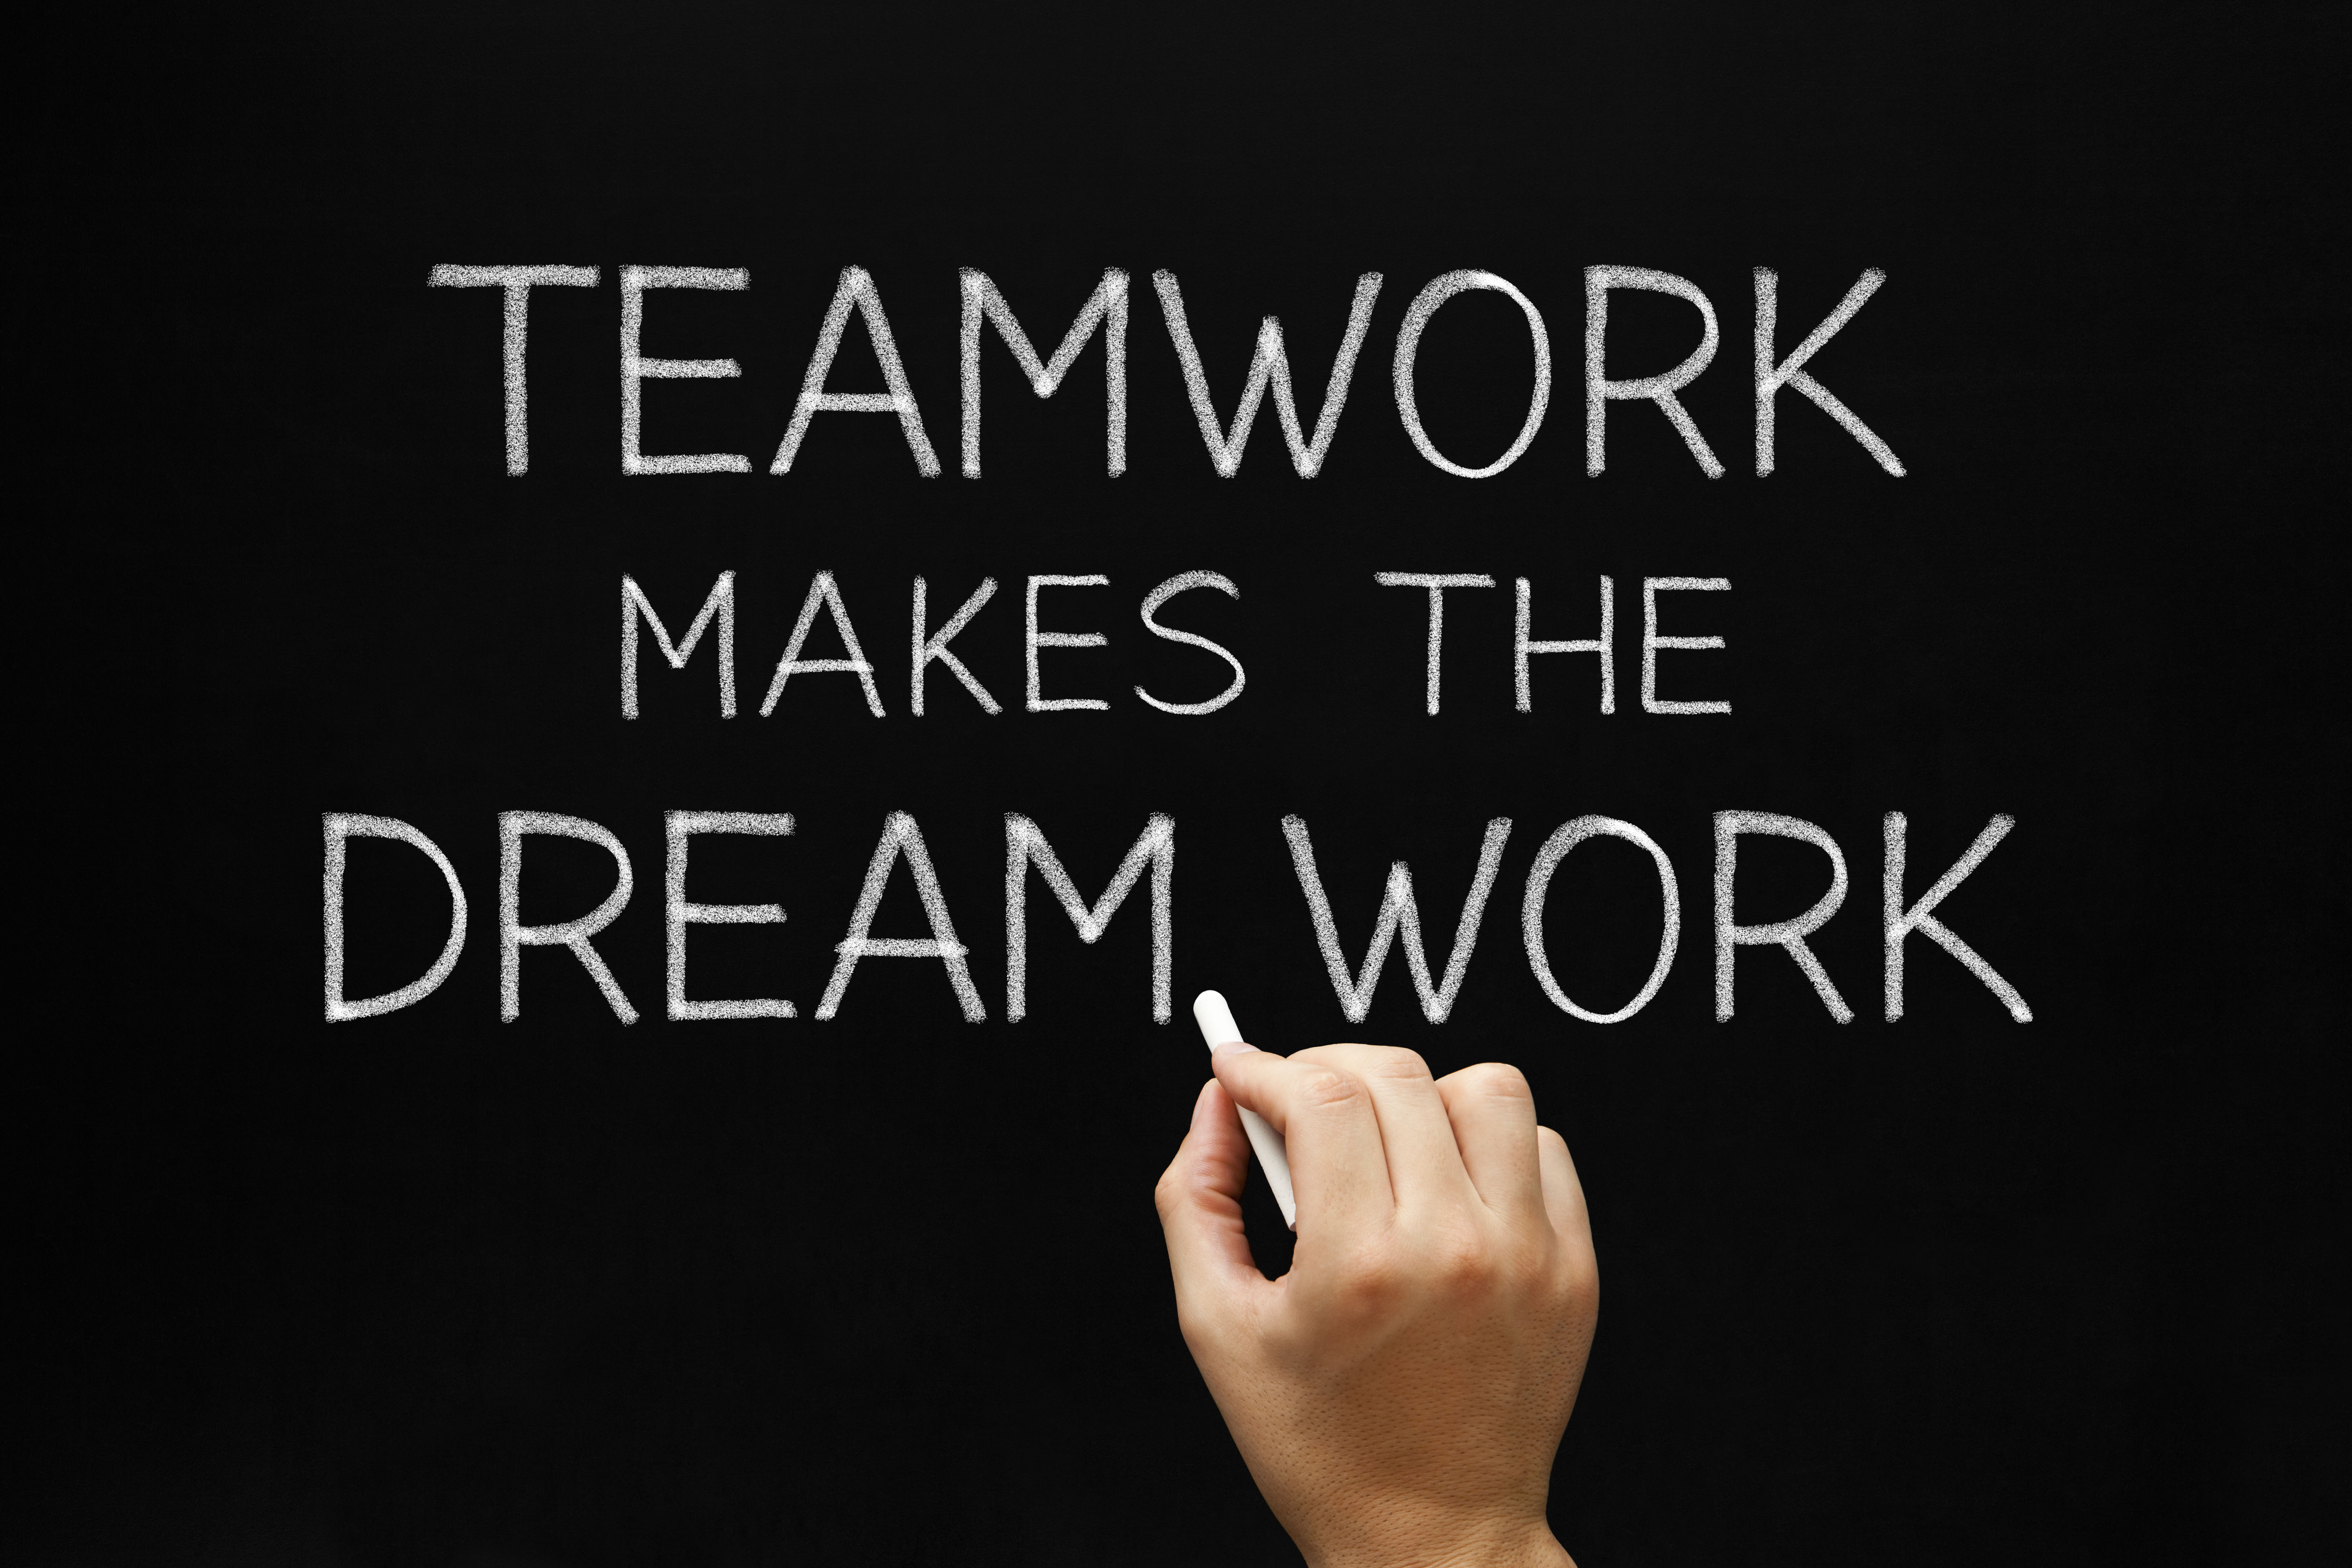 essay on team work makes dream work